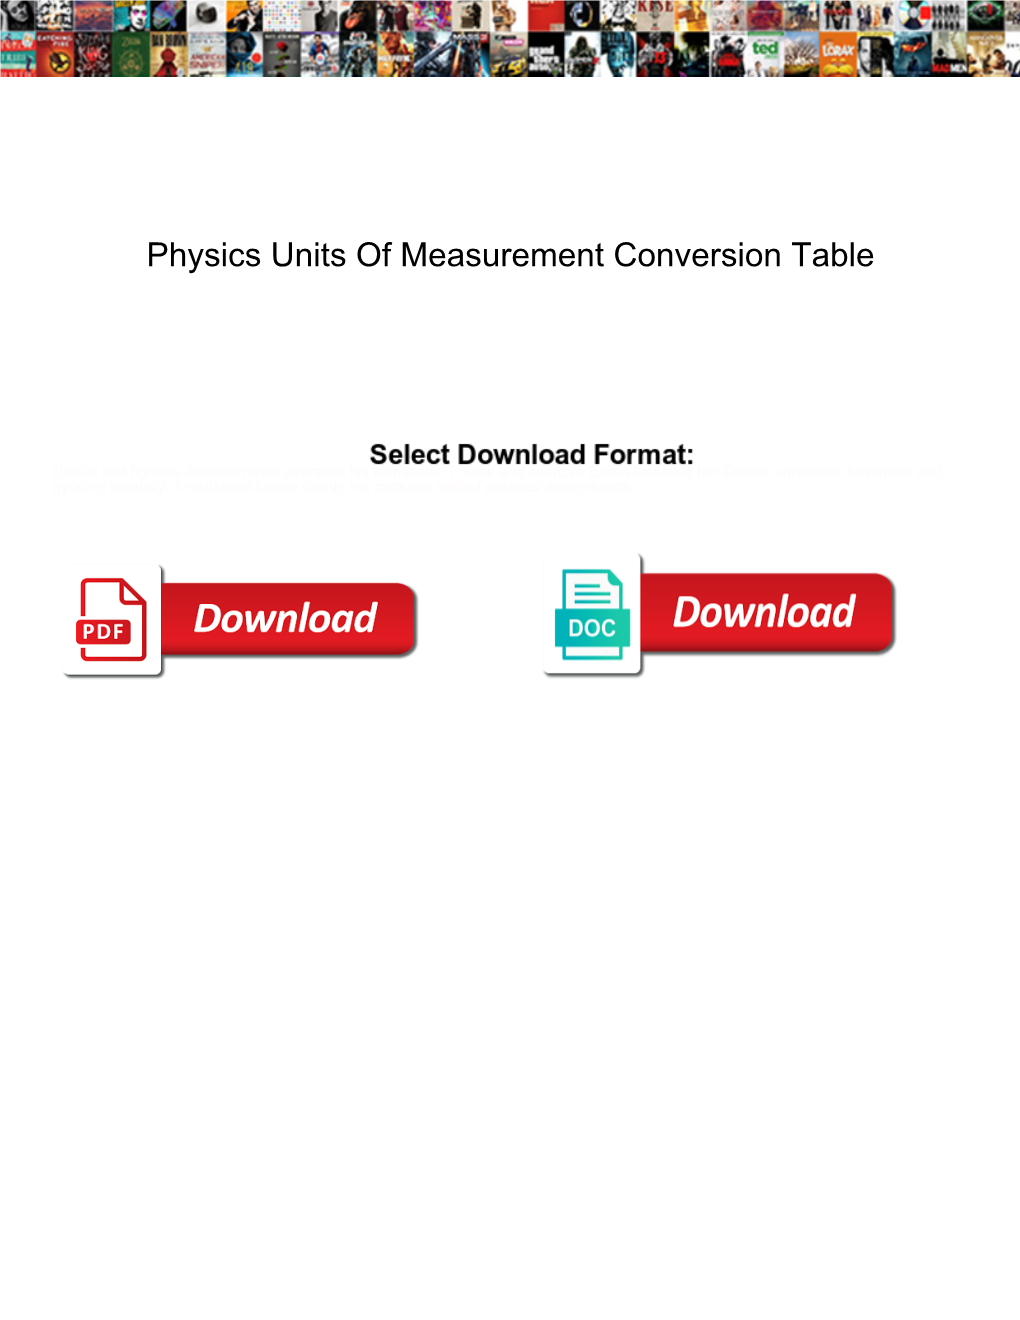 physics-units-of-measurement-conversion-table-docslib